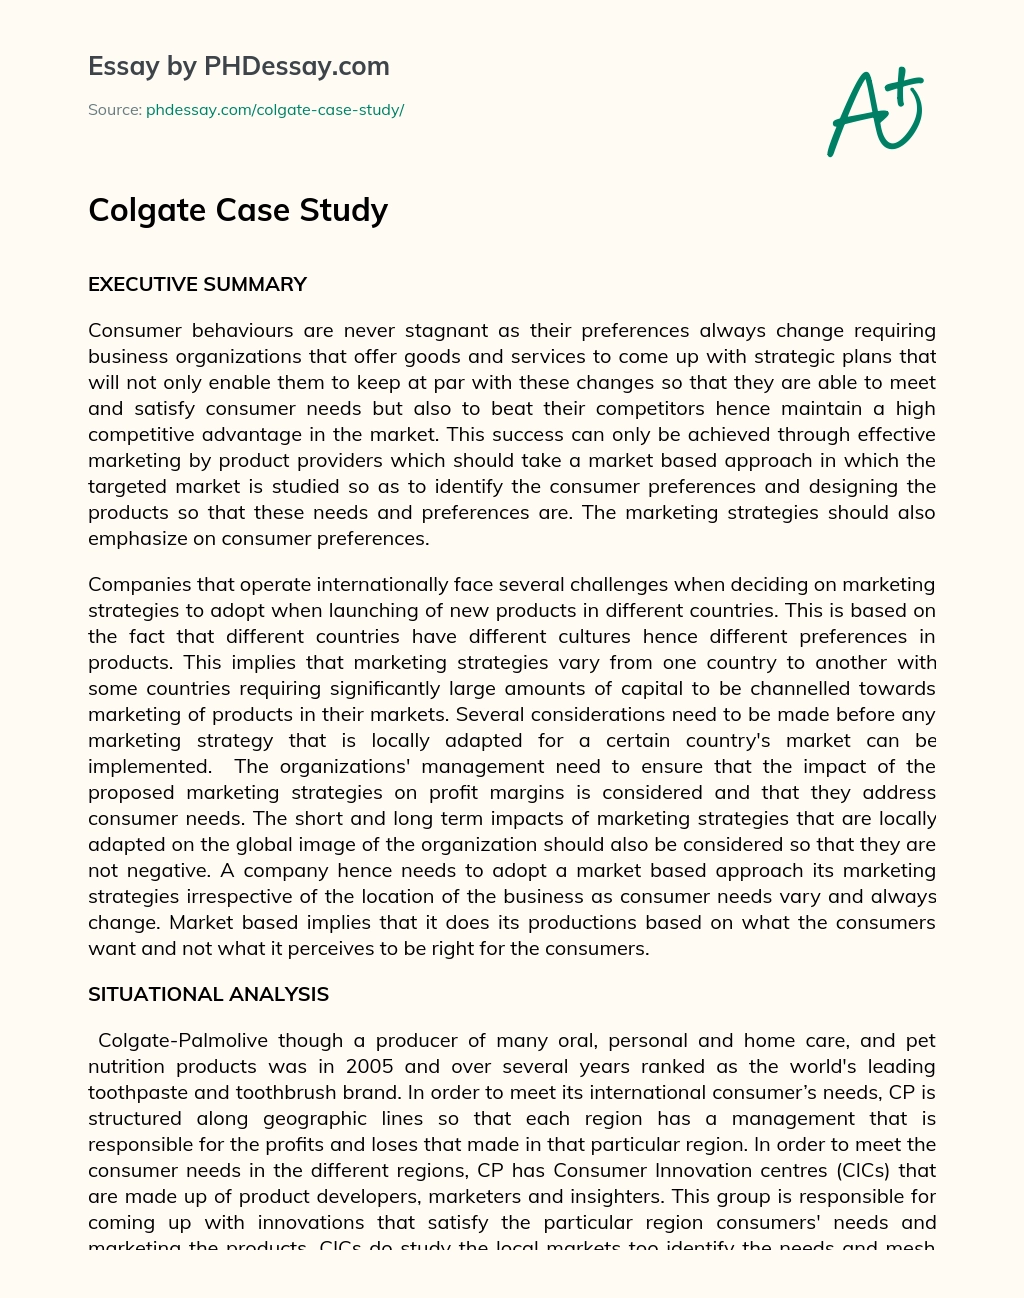 Colgate Case Study essay